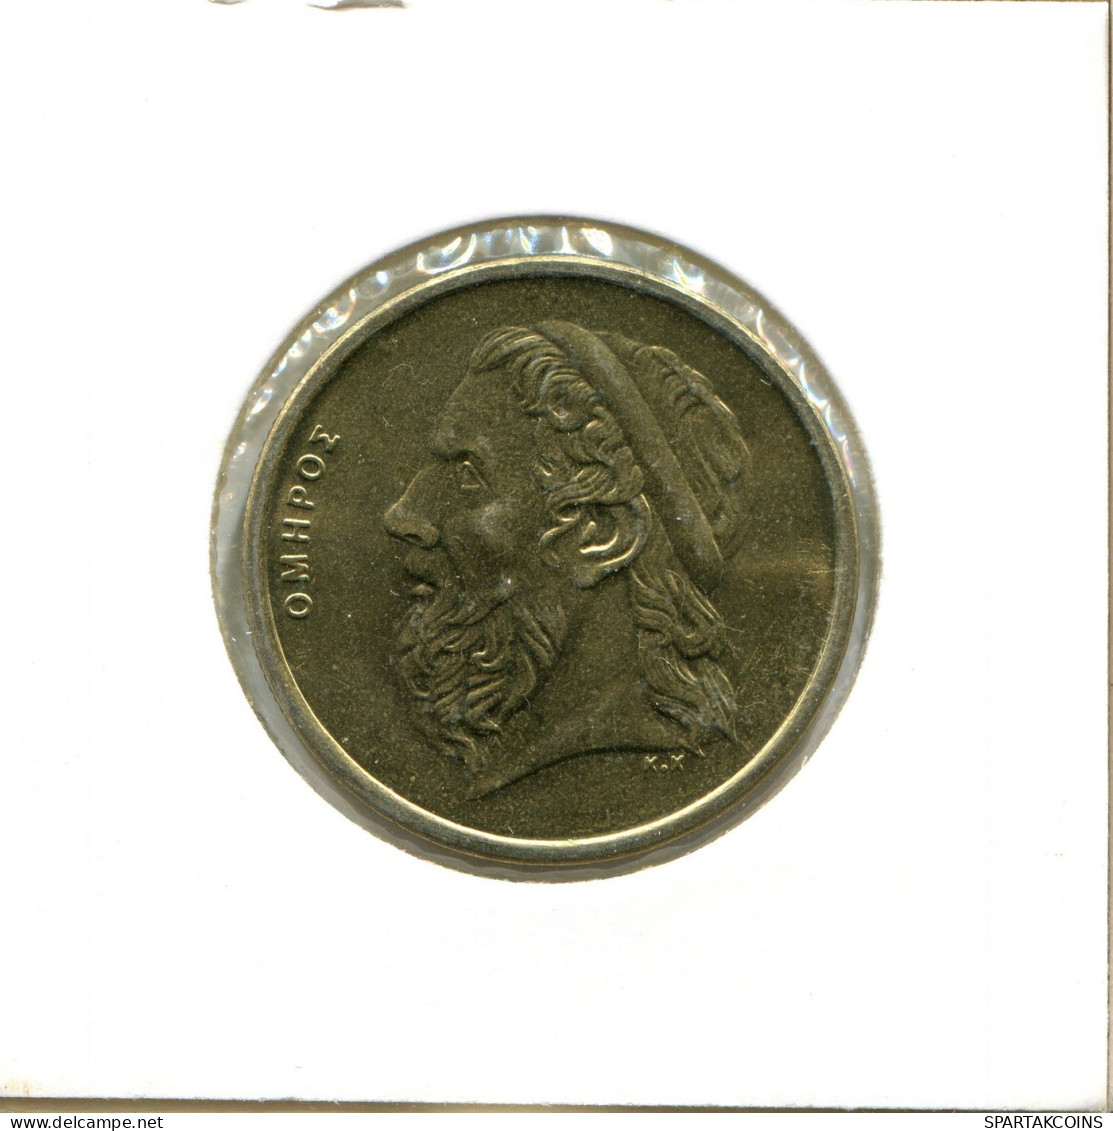 50 DRACHMES 1988 GRECIA GREECE Moneda #AX657.E.A - Grecia